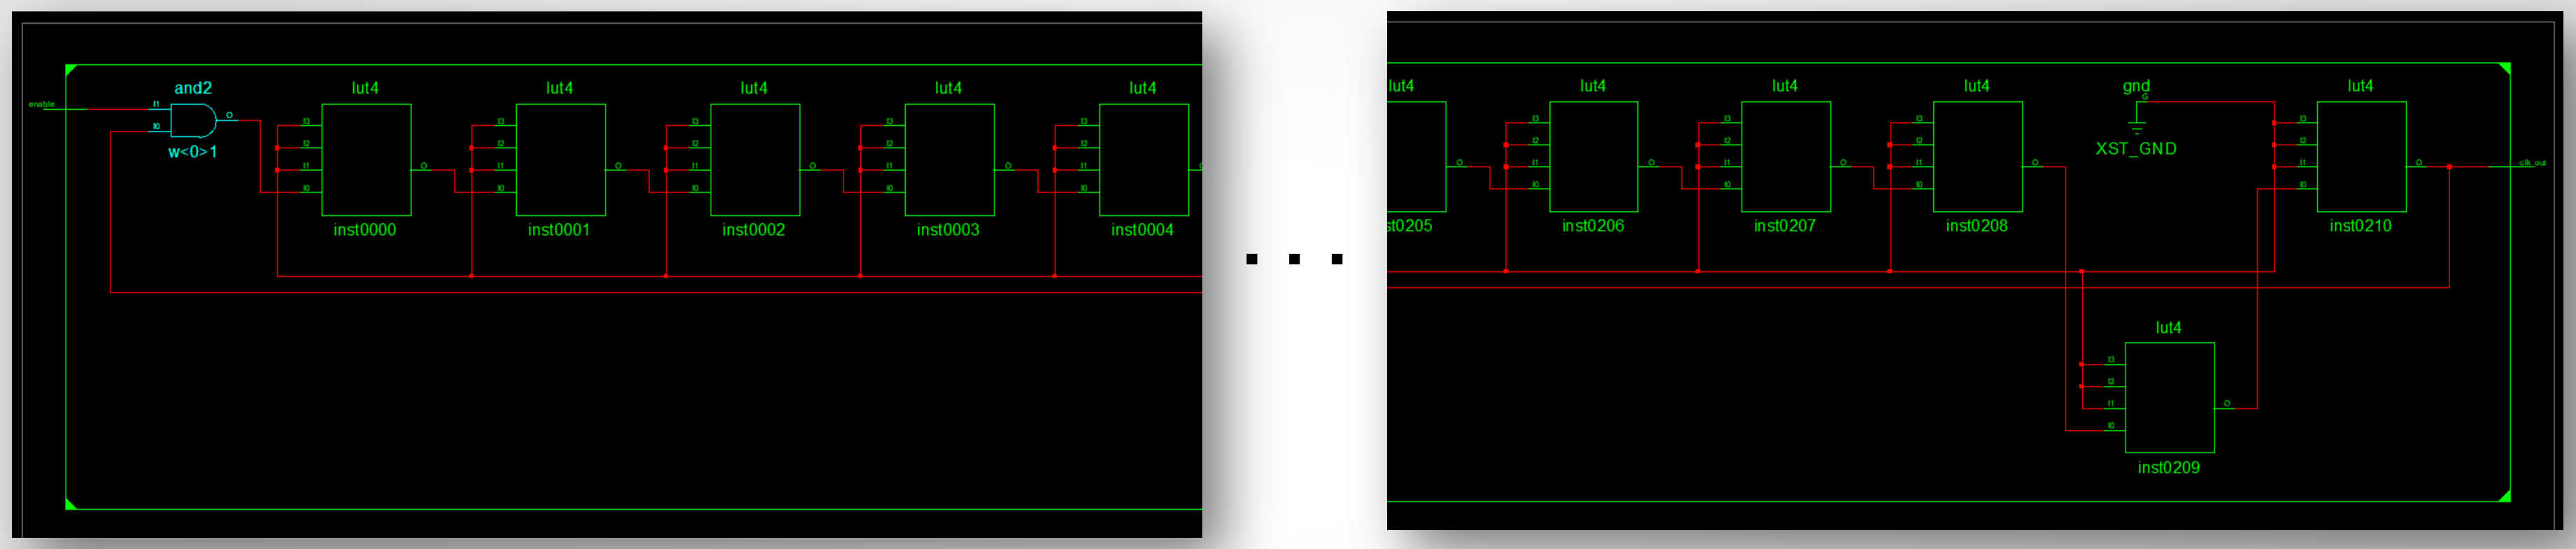 Full current ring oscillator schematic